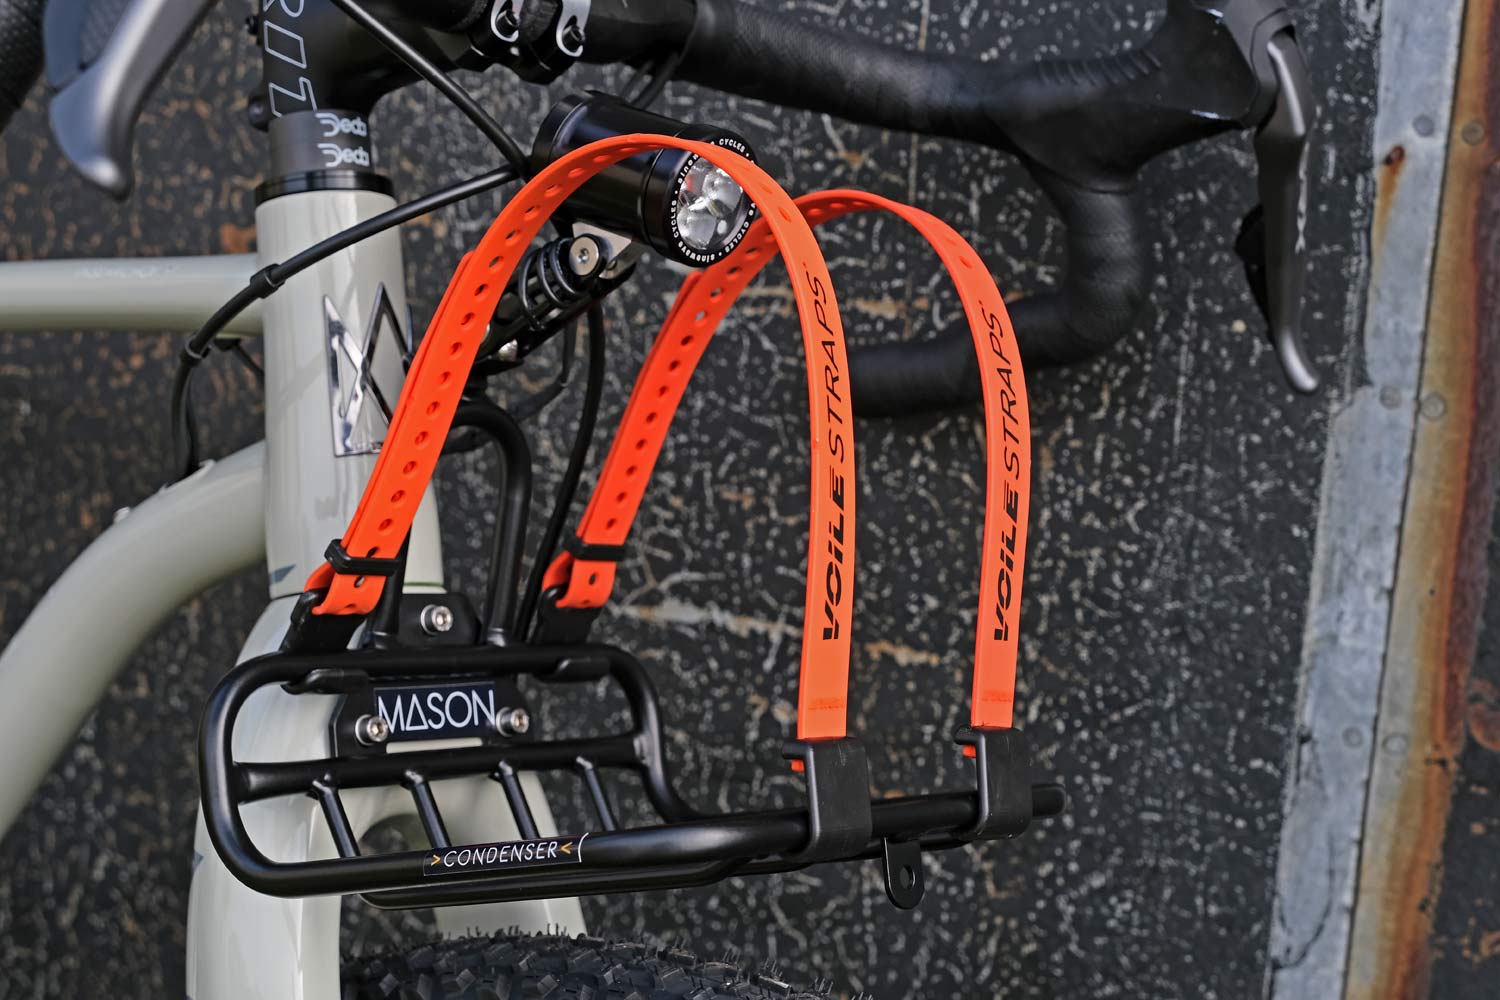 Mason ISO Condenser rack, adventure bikepacking mini off-road HotShoe fork rack, Voile Rack Straps